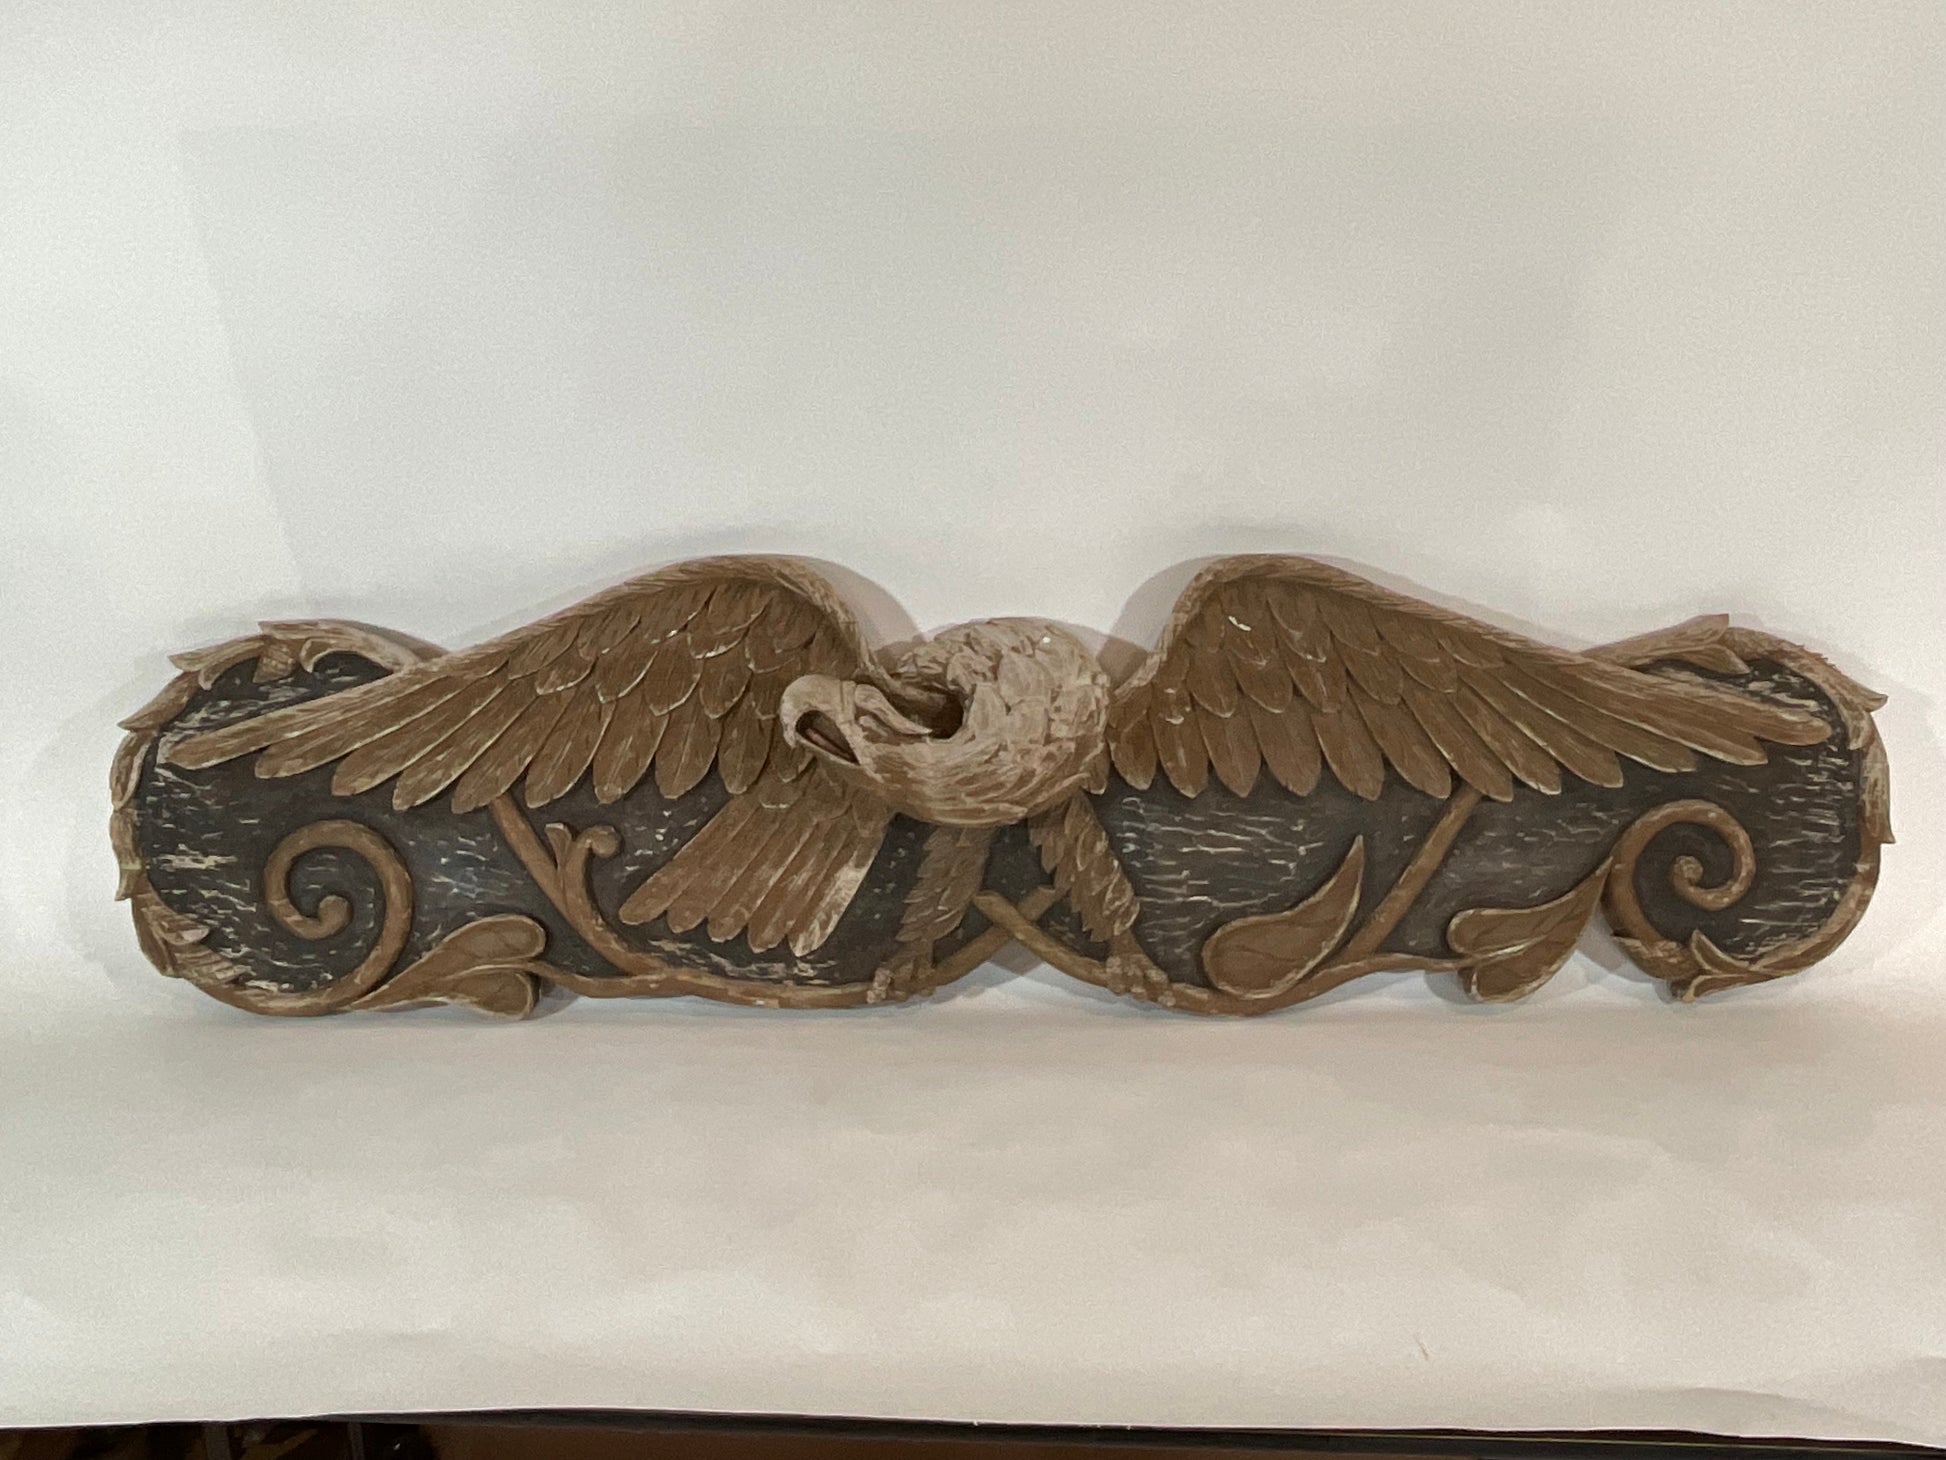 Six Foot Carved Eagle Stern Board - Lannan Gallery